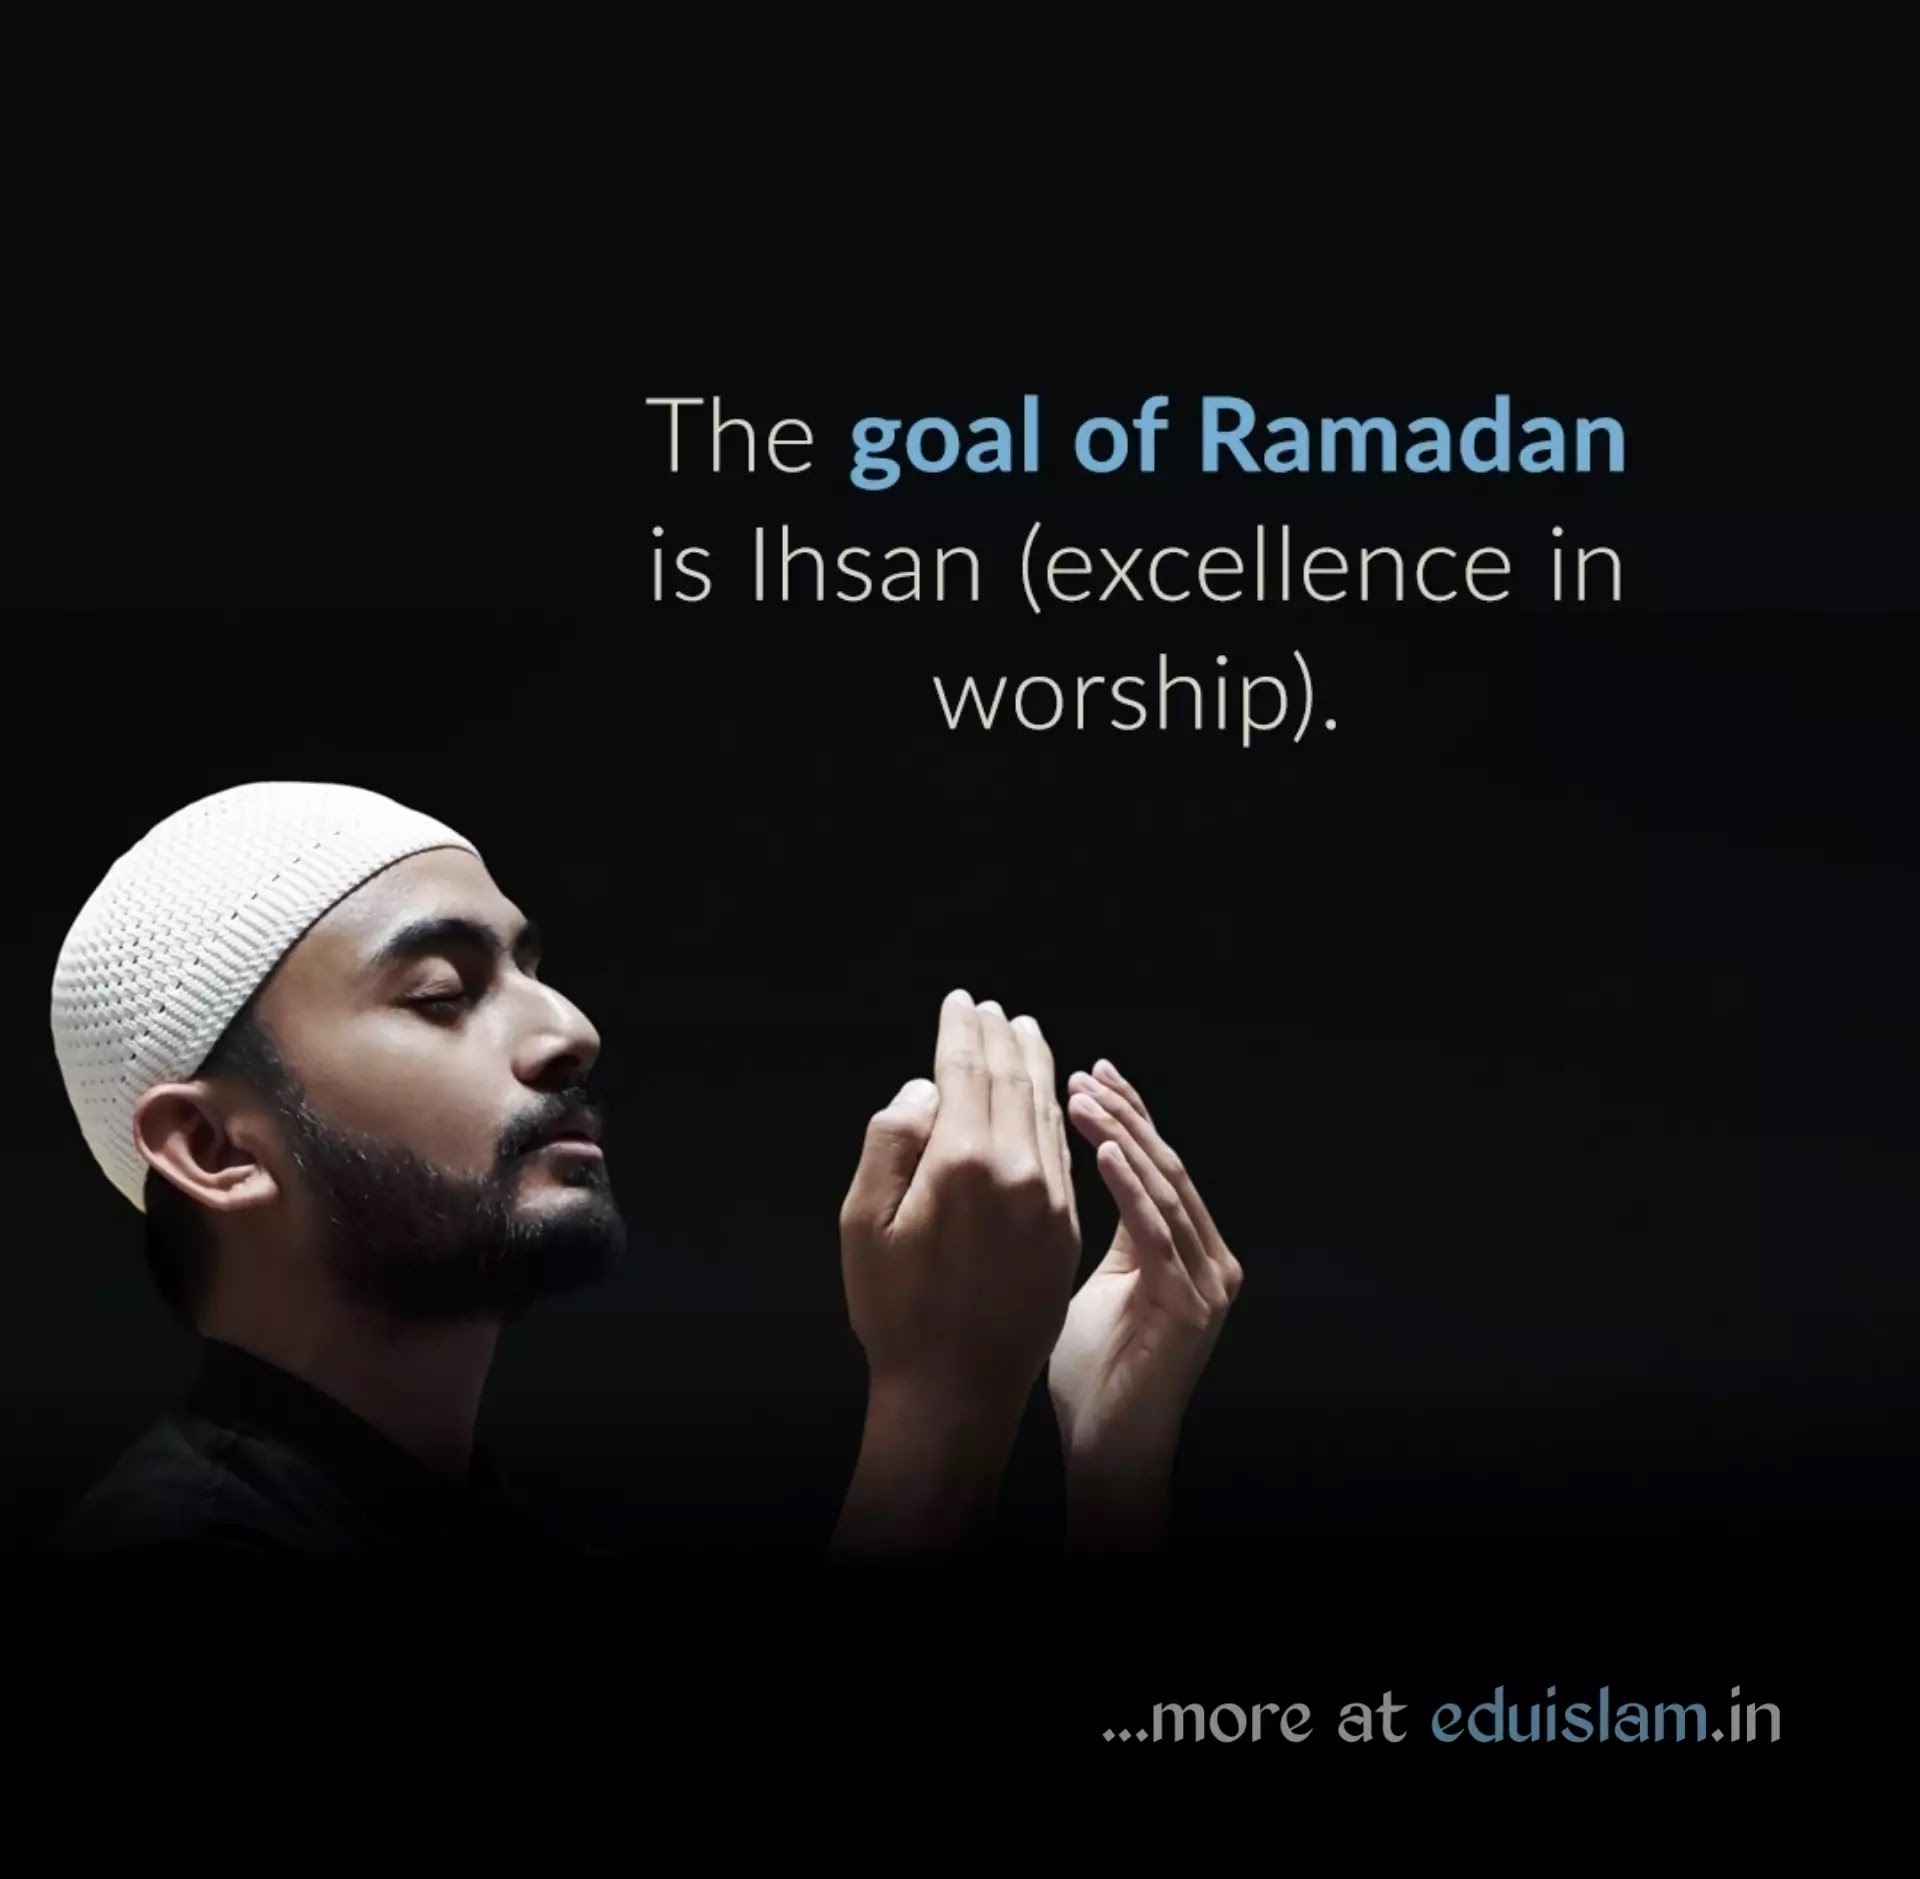 Goal of Ramadan quotes